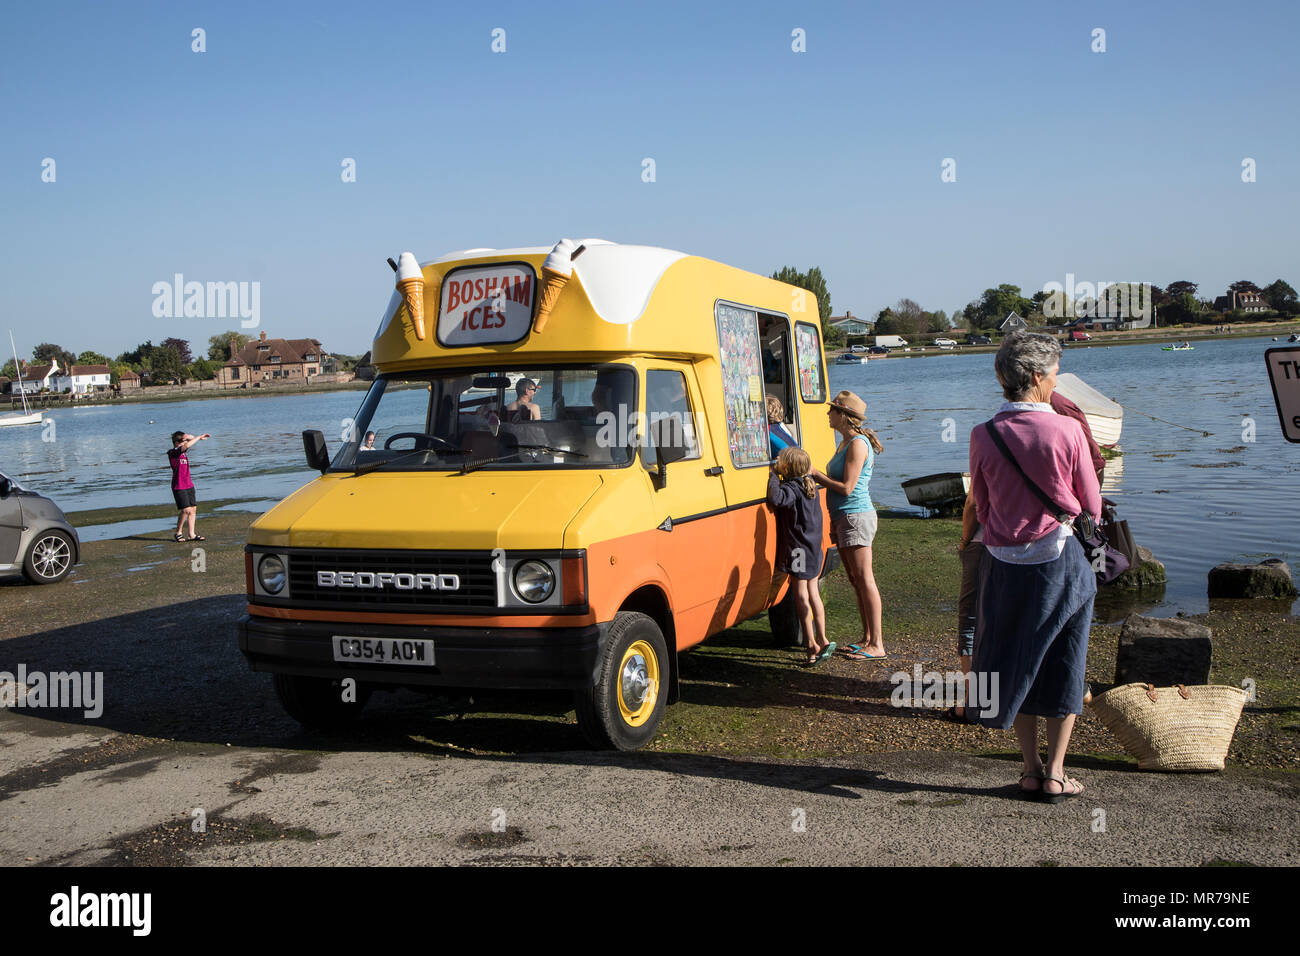 74 bedford ice cream van